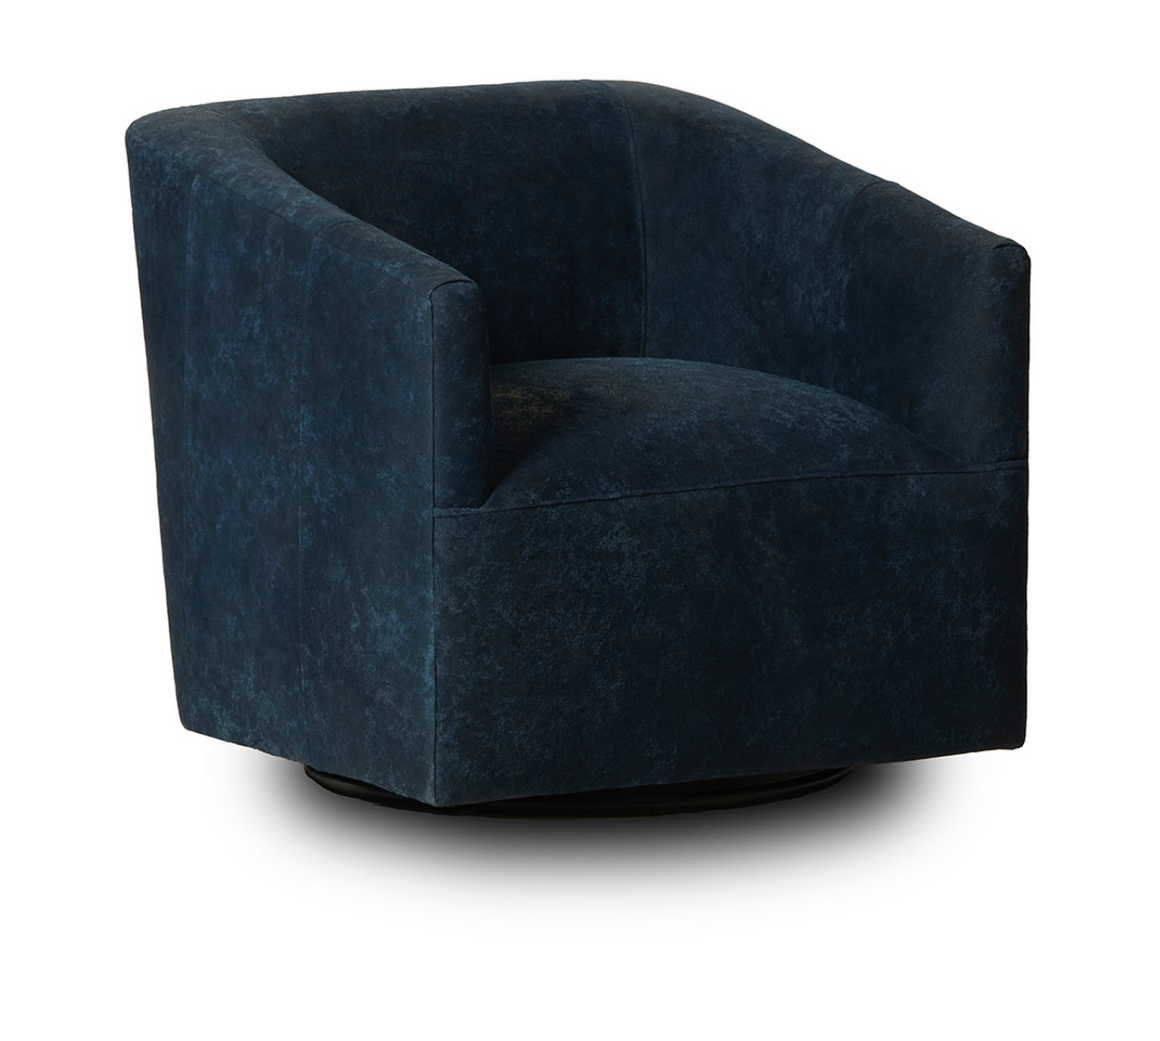 Jaxon 30" Top Grain Leather Swivel Chair - Deep Lagoon